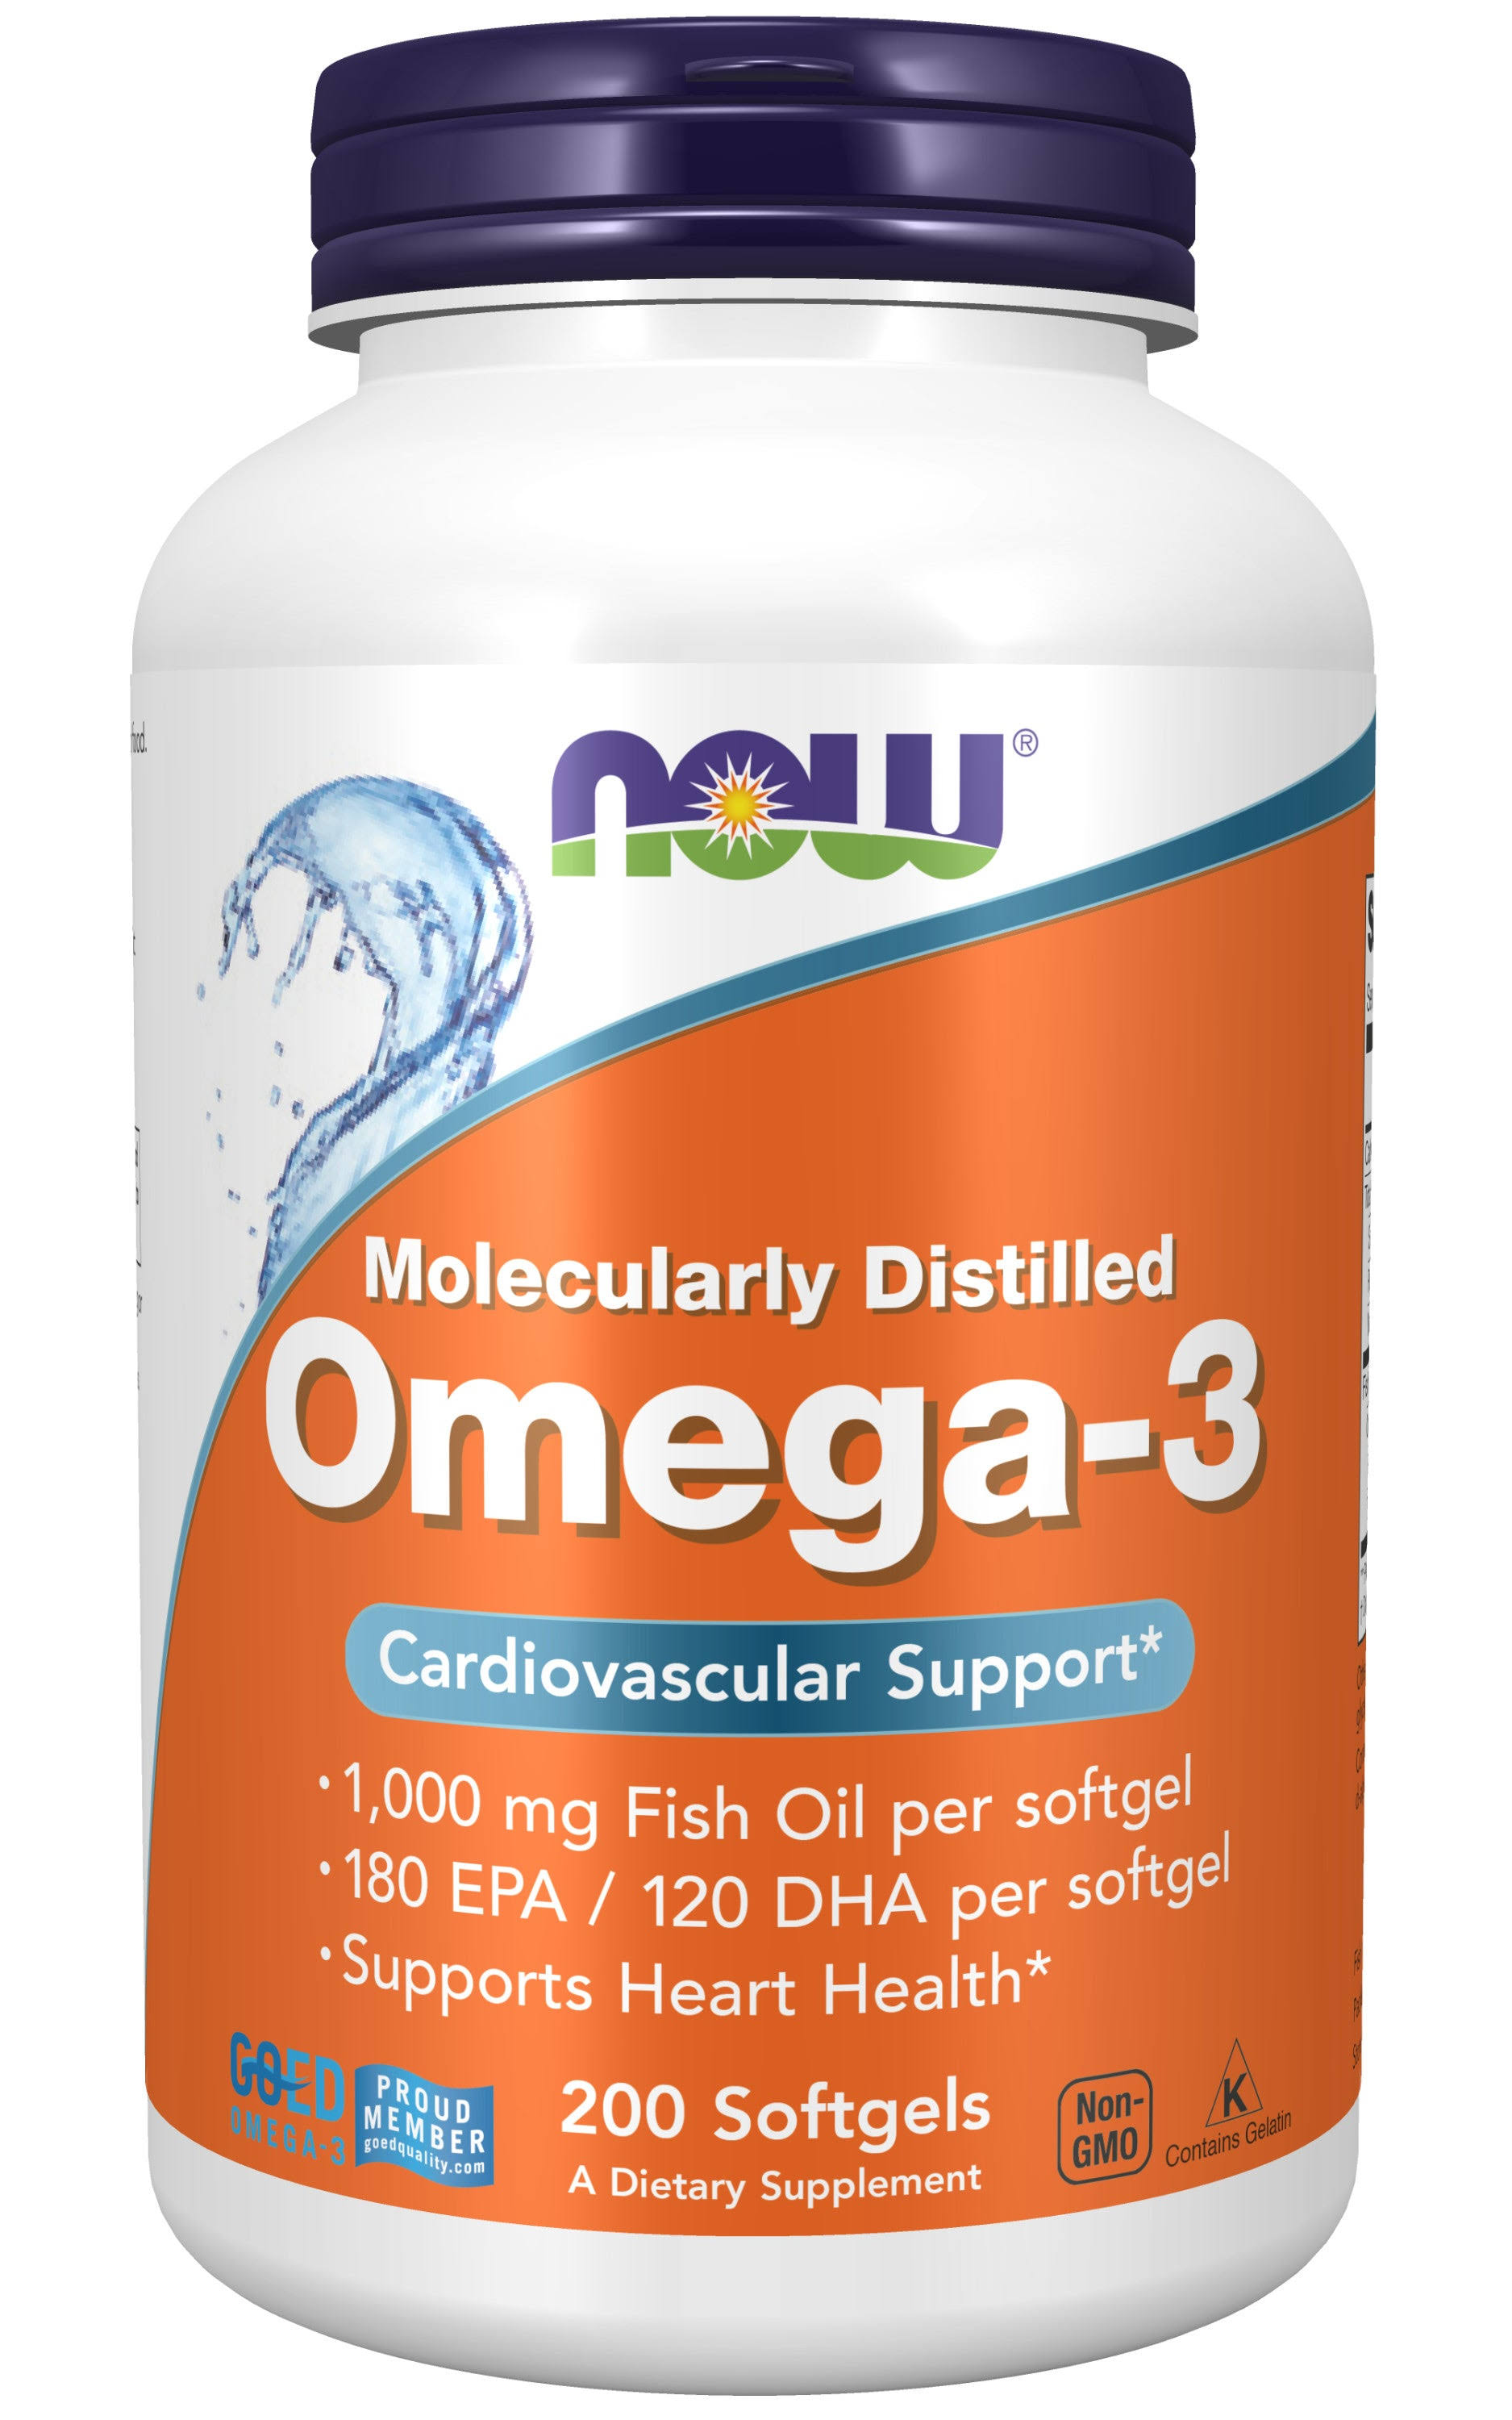 Omega 3 Cardiovascular Support - 200 Softgels